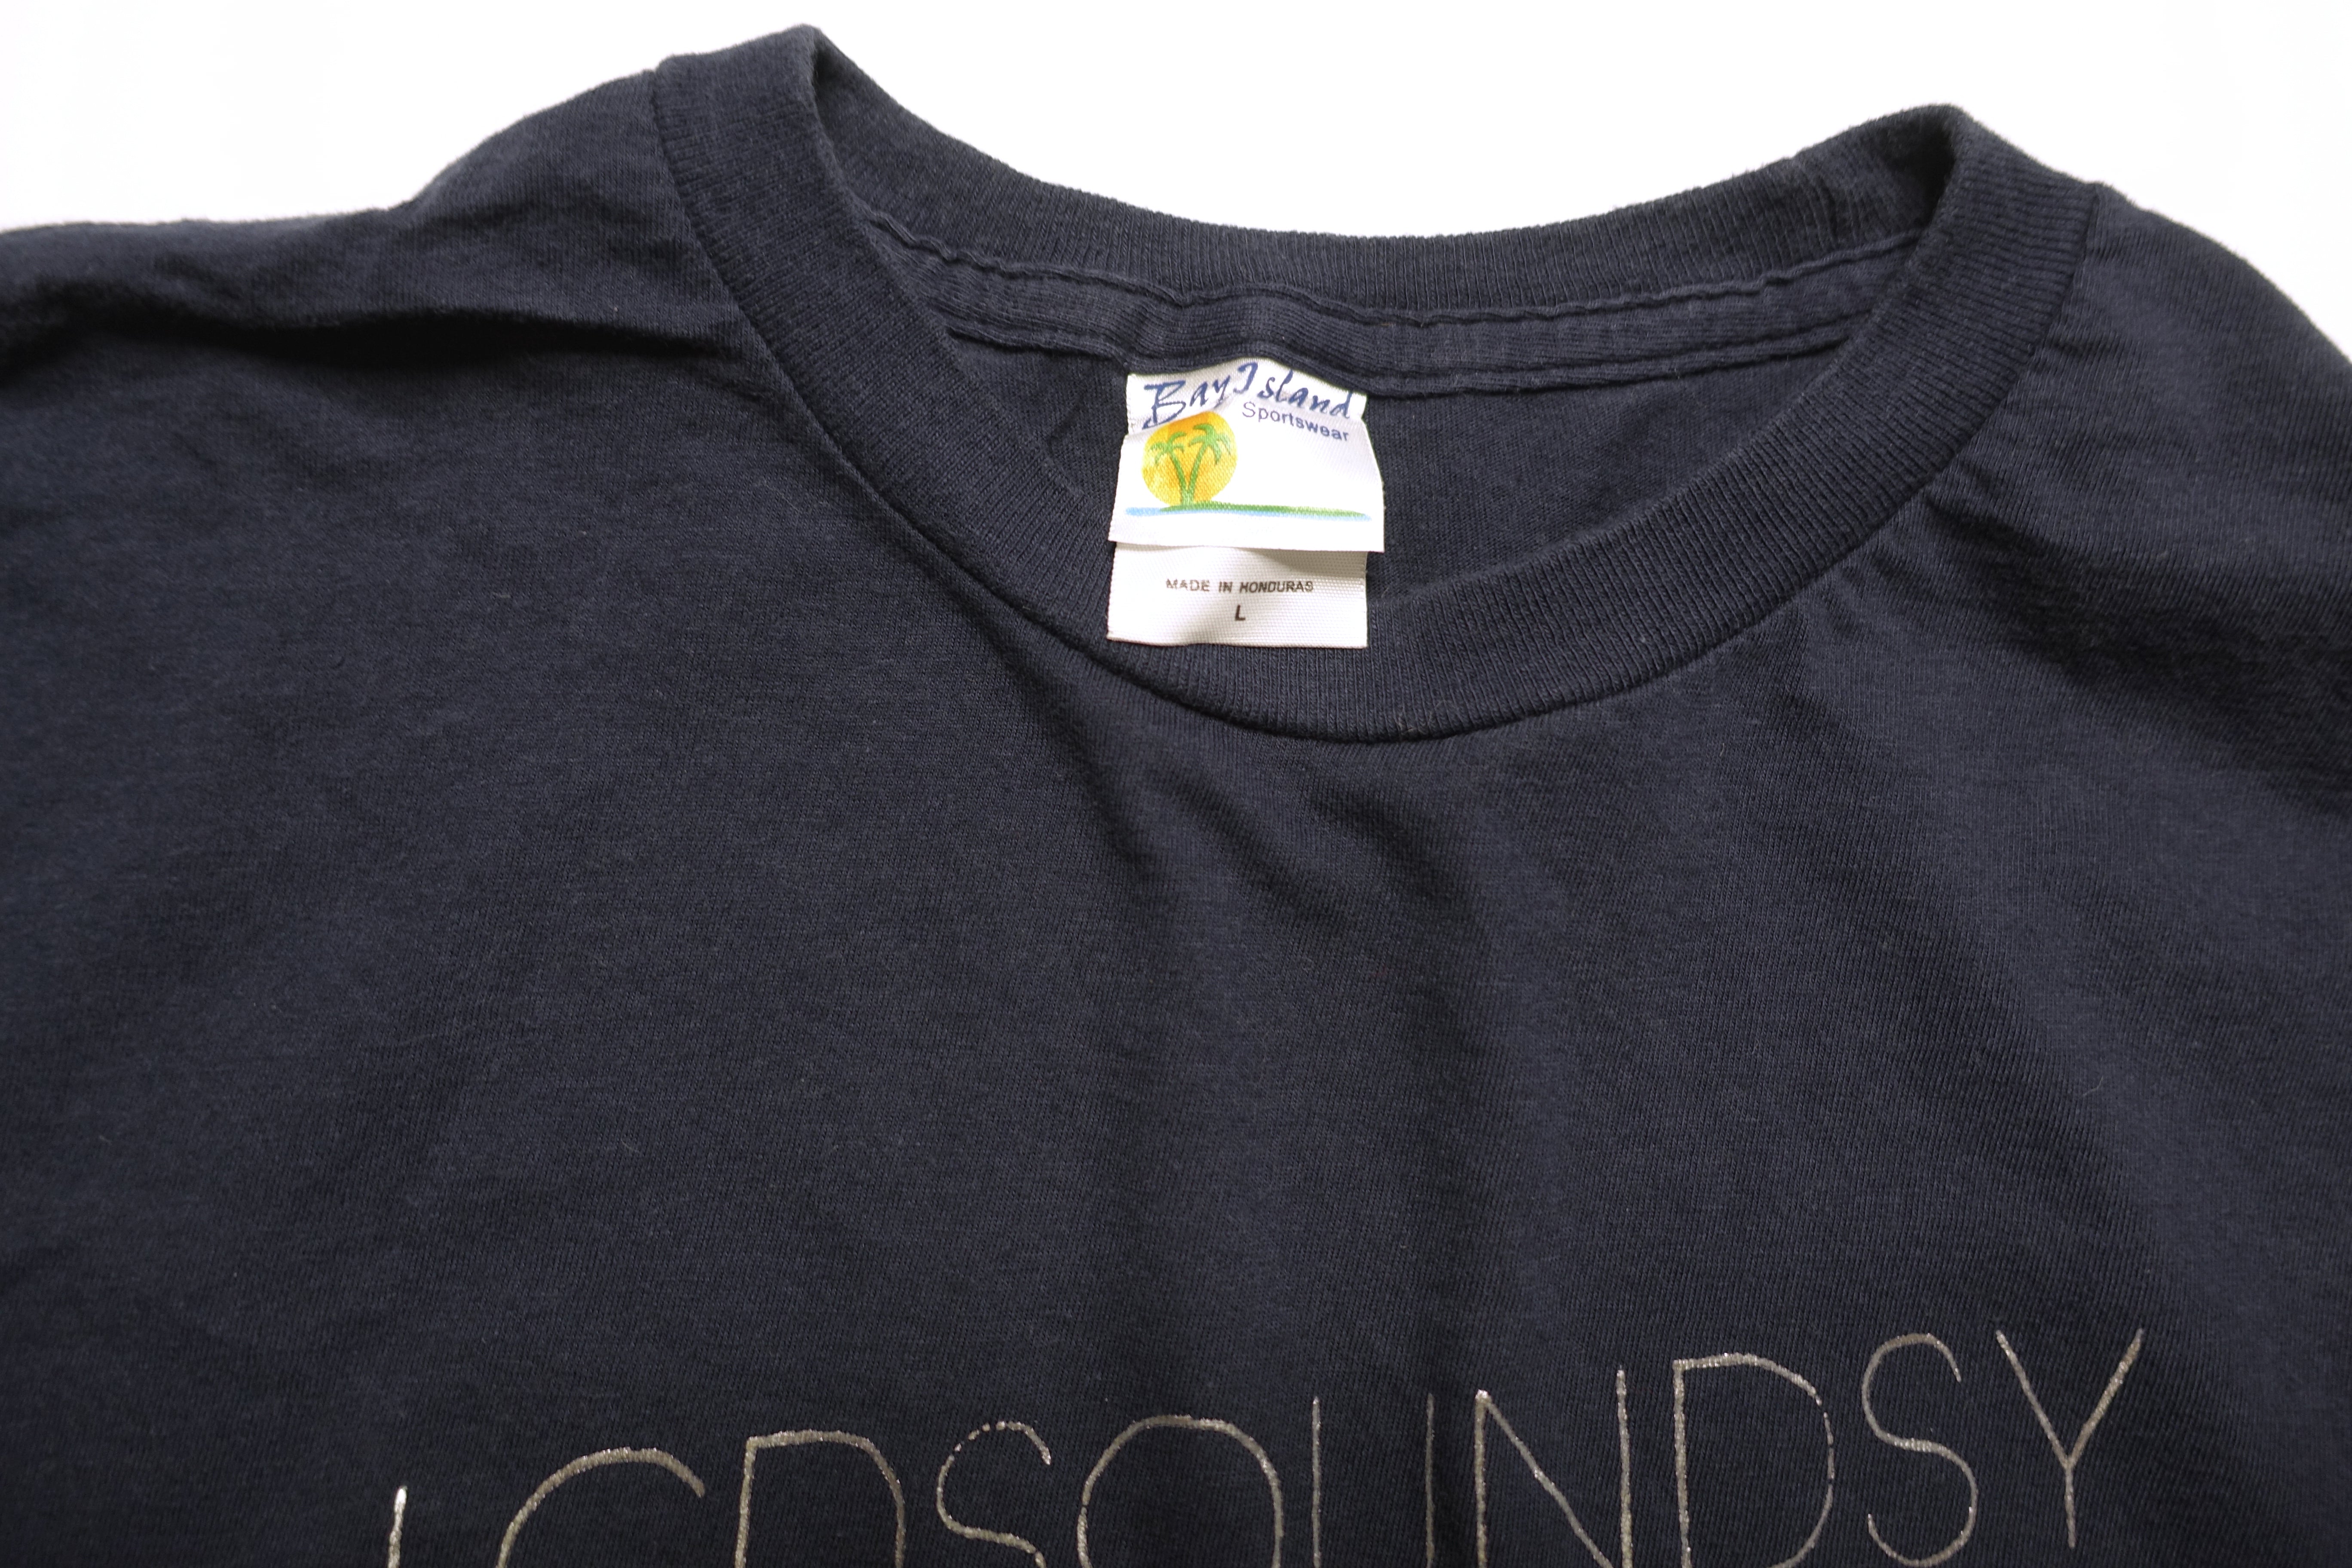 LCD Soundsystem - Sound Of Silver 2007 Tour Shirt Size Large